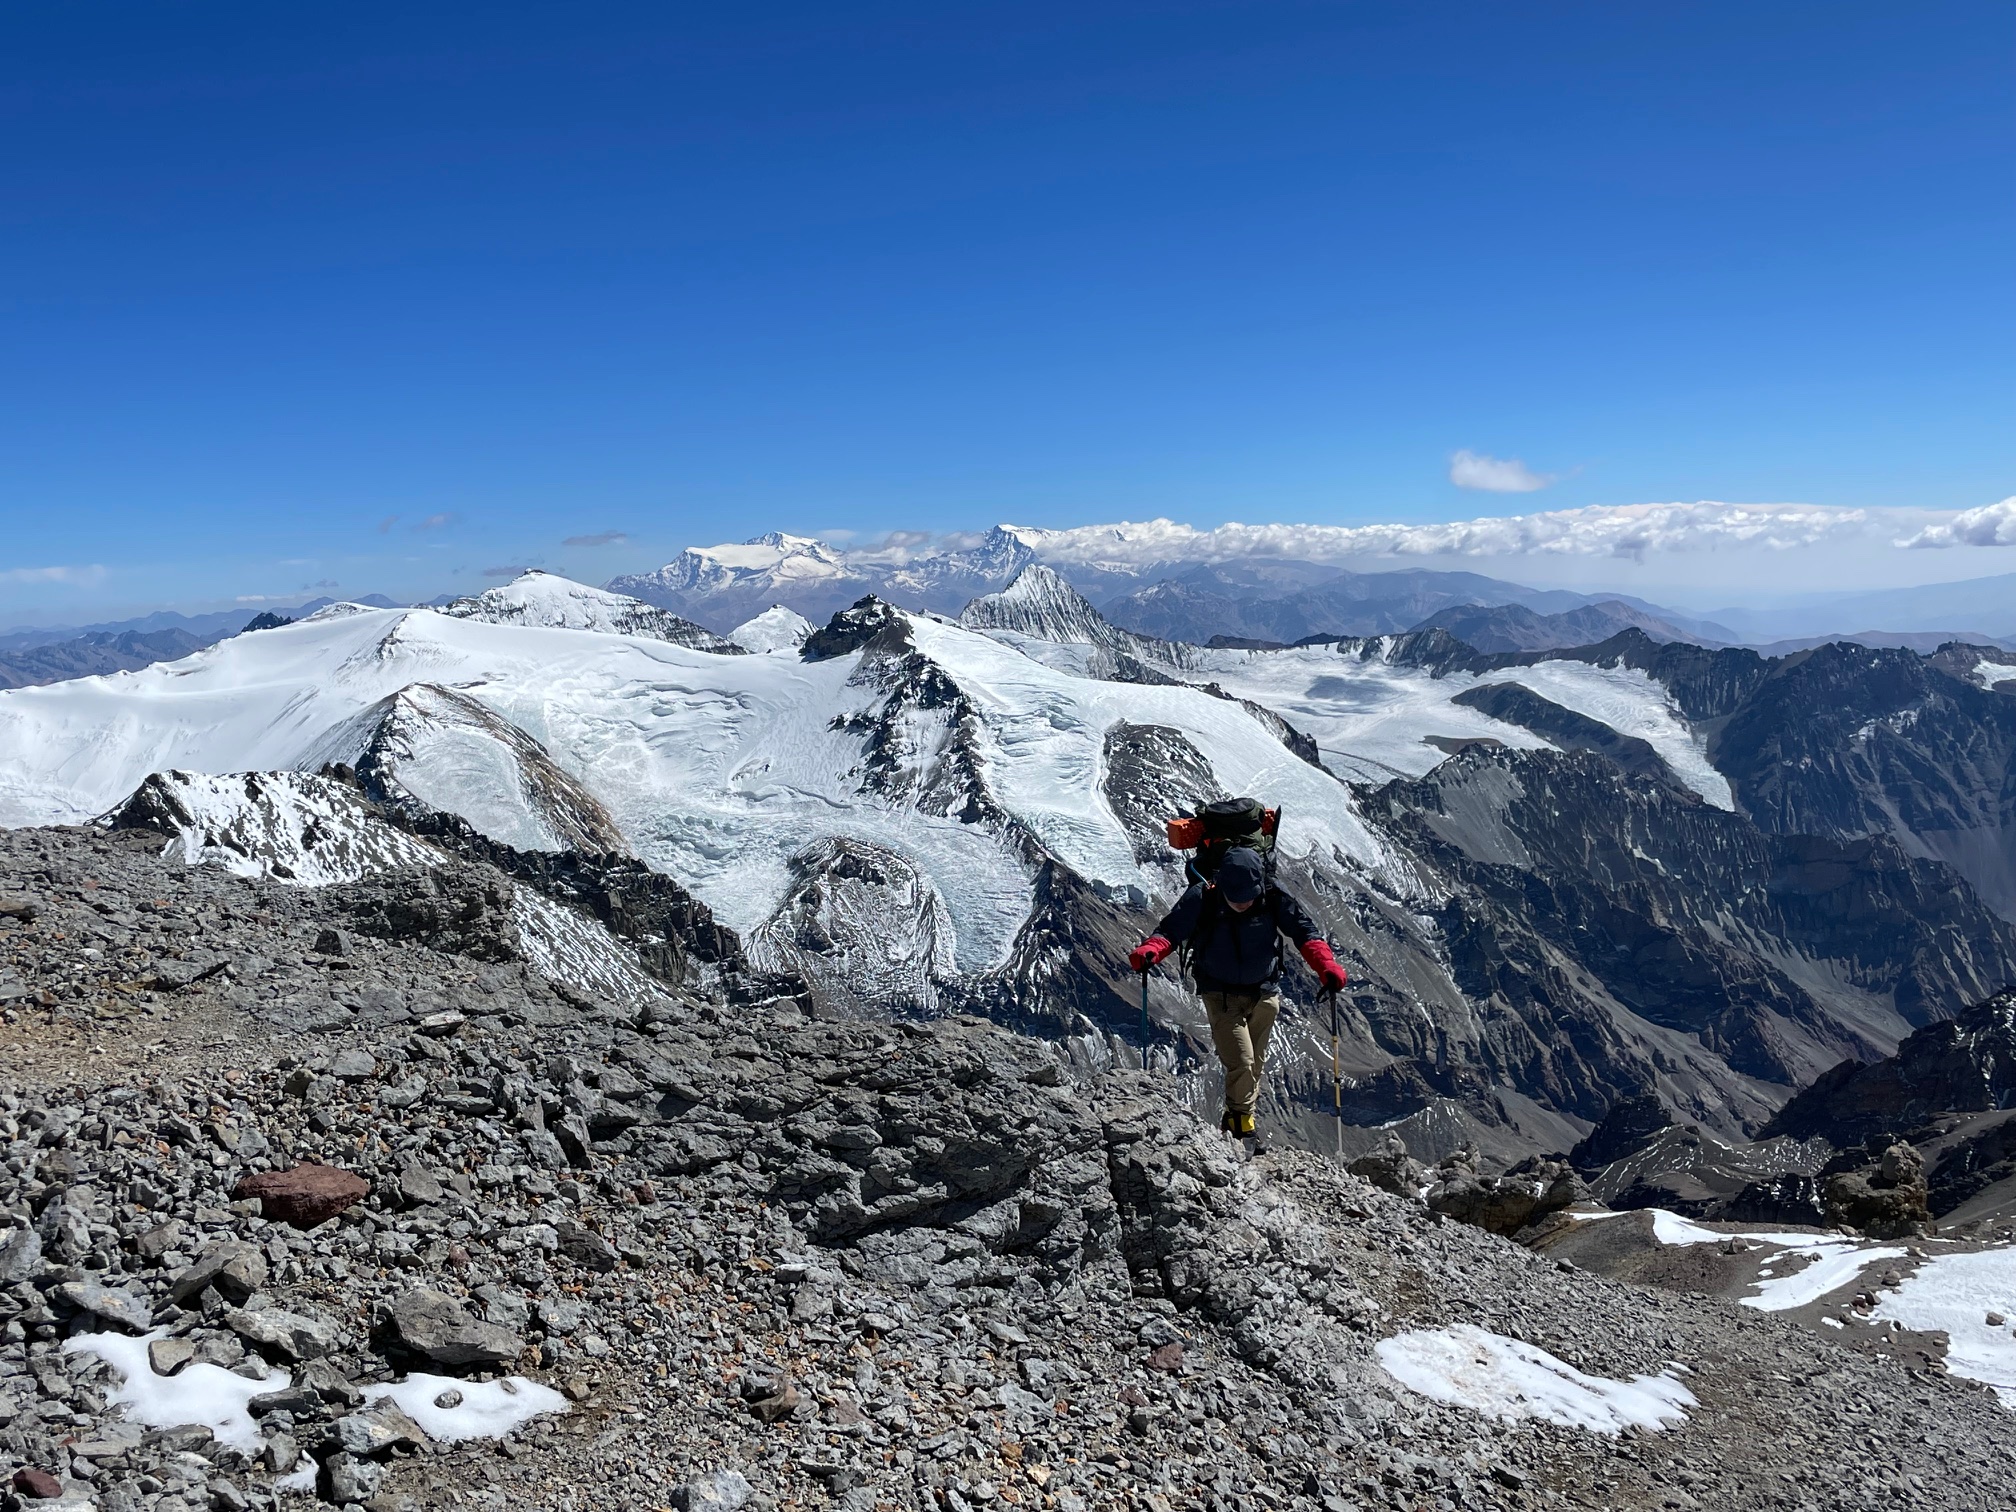 Can a Beginner climb Aconcagua